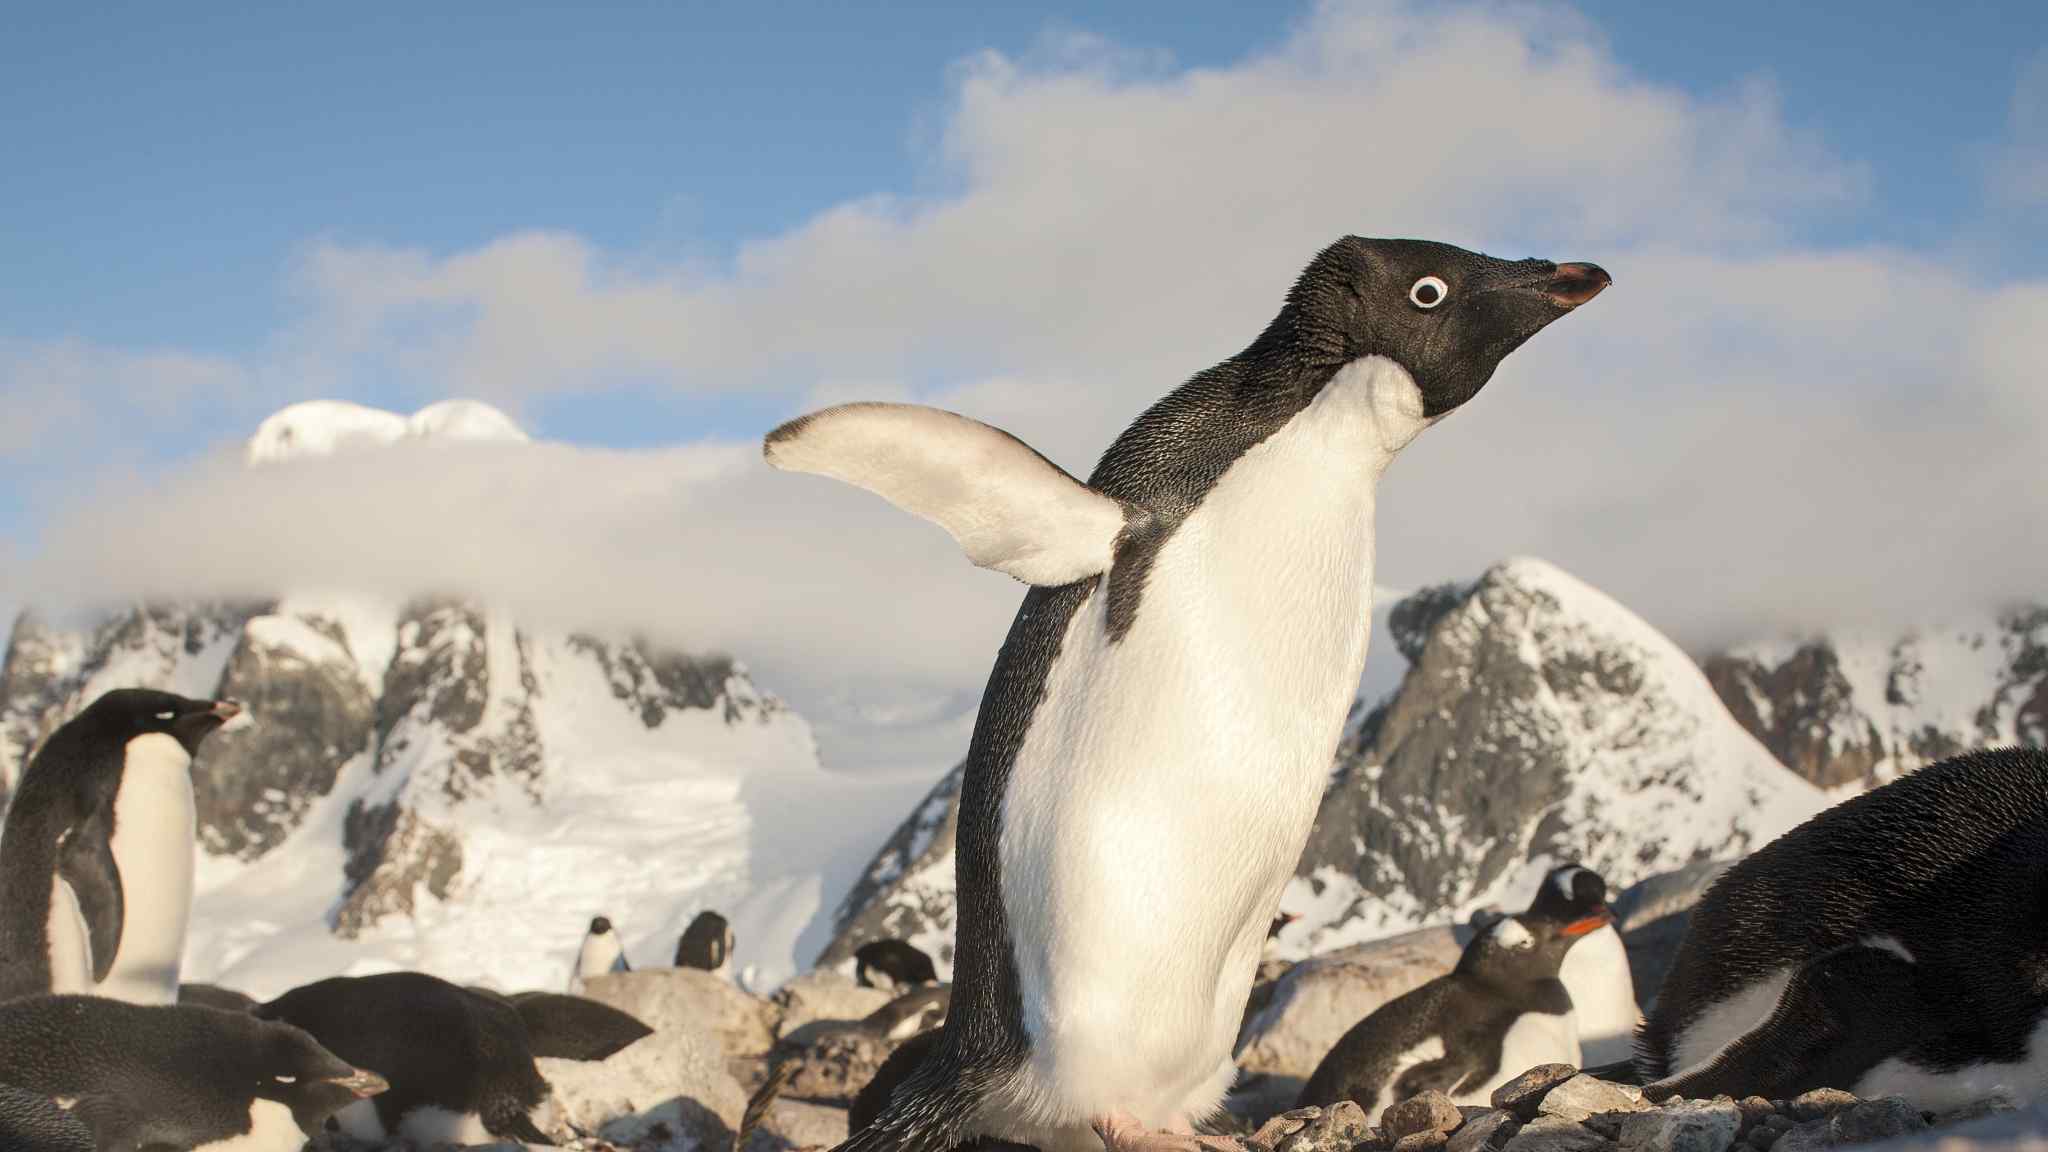 Penguin poo images reveal changes in Antarctic ecosystem  